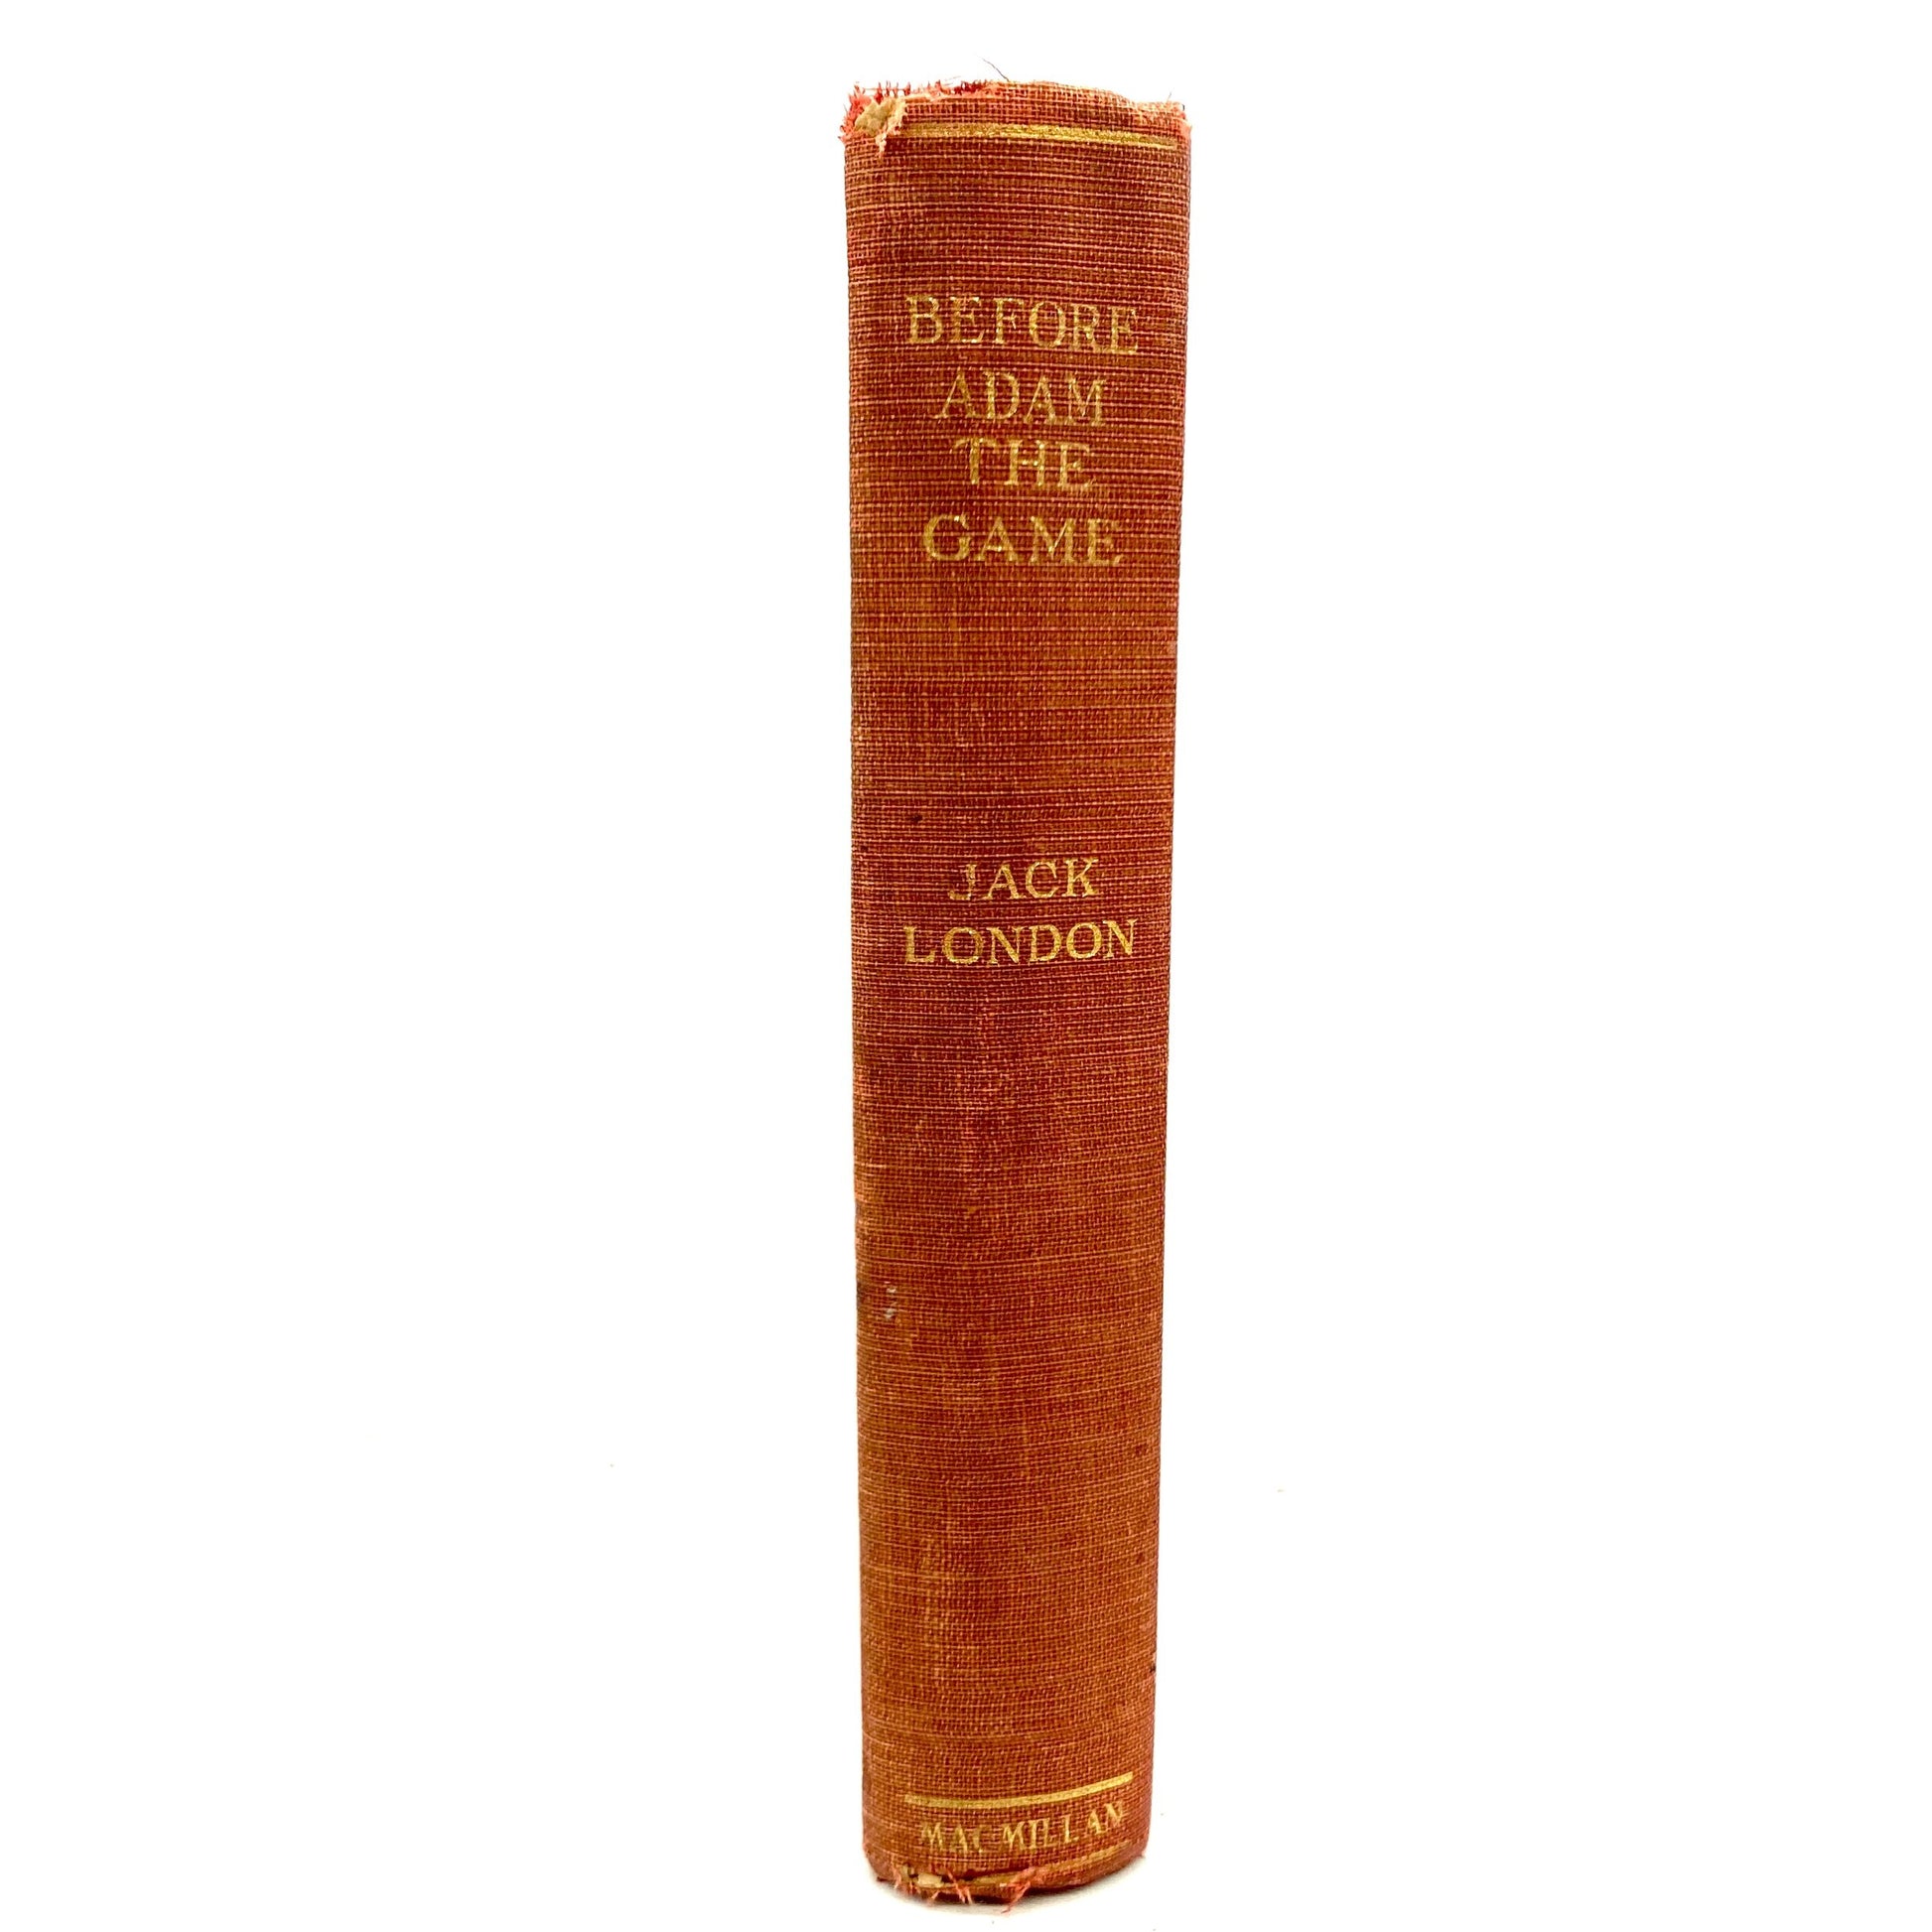 LONDON, Jack "Before Adam"/"The Game" [Macmillan, 1924] - Buzz Bookstore